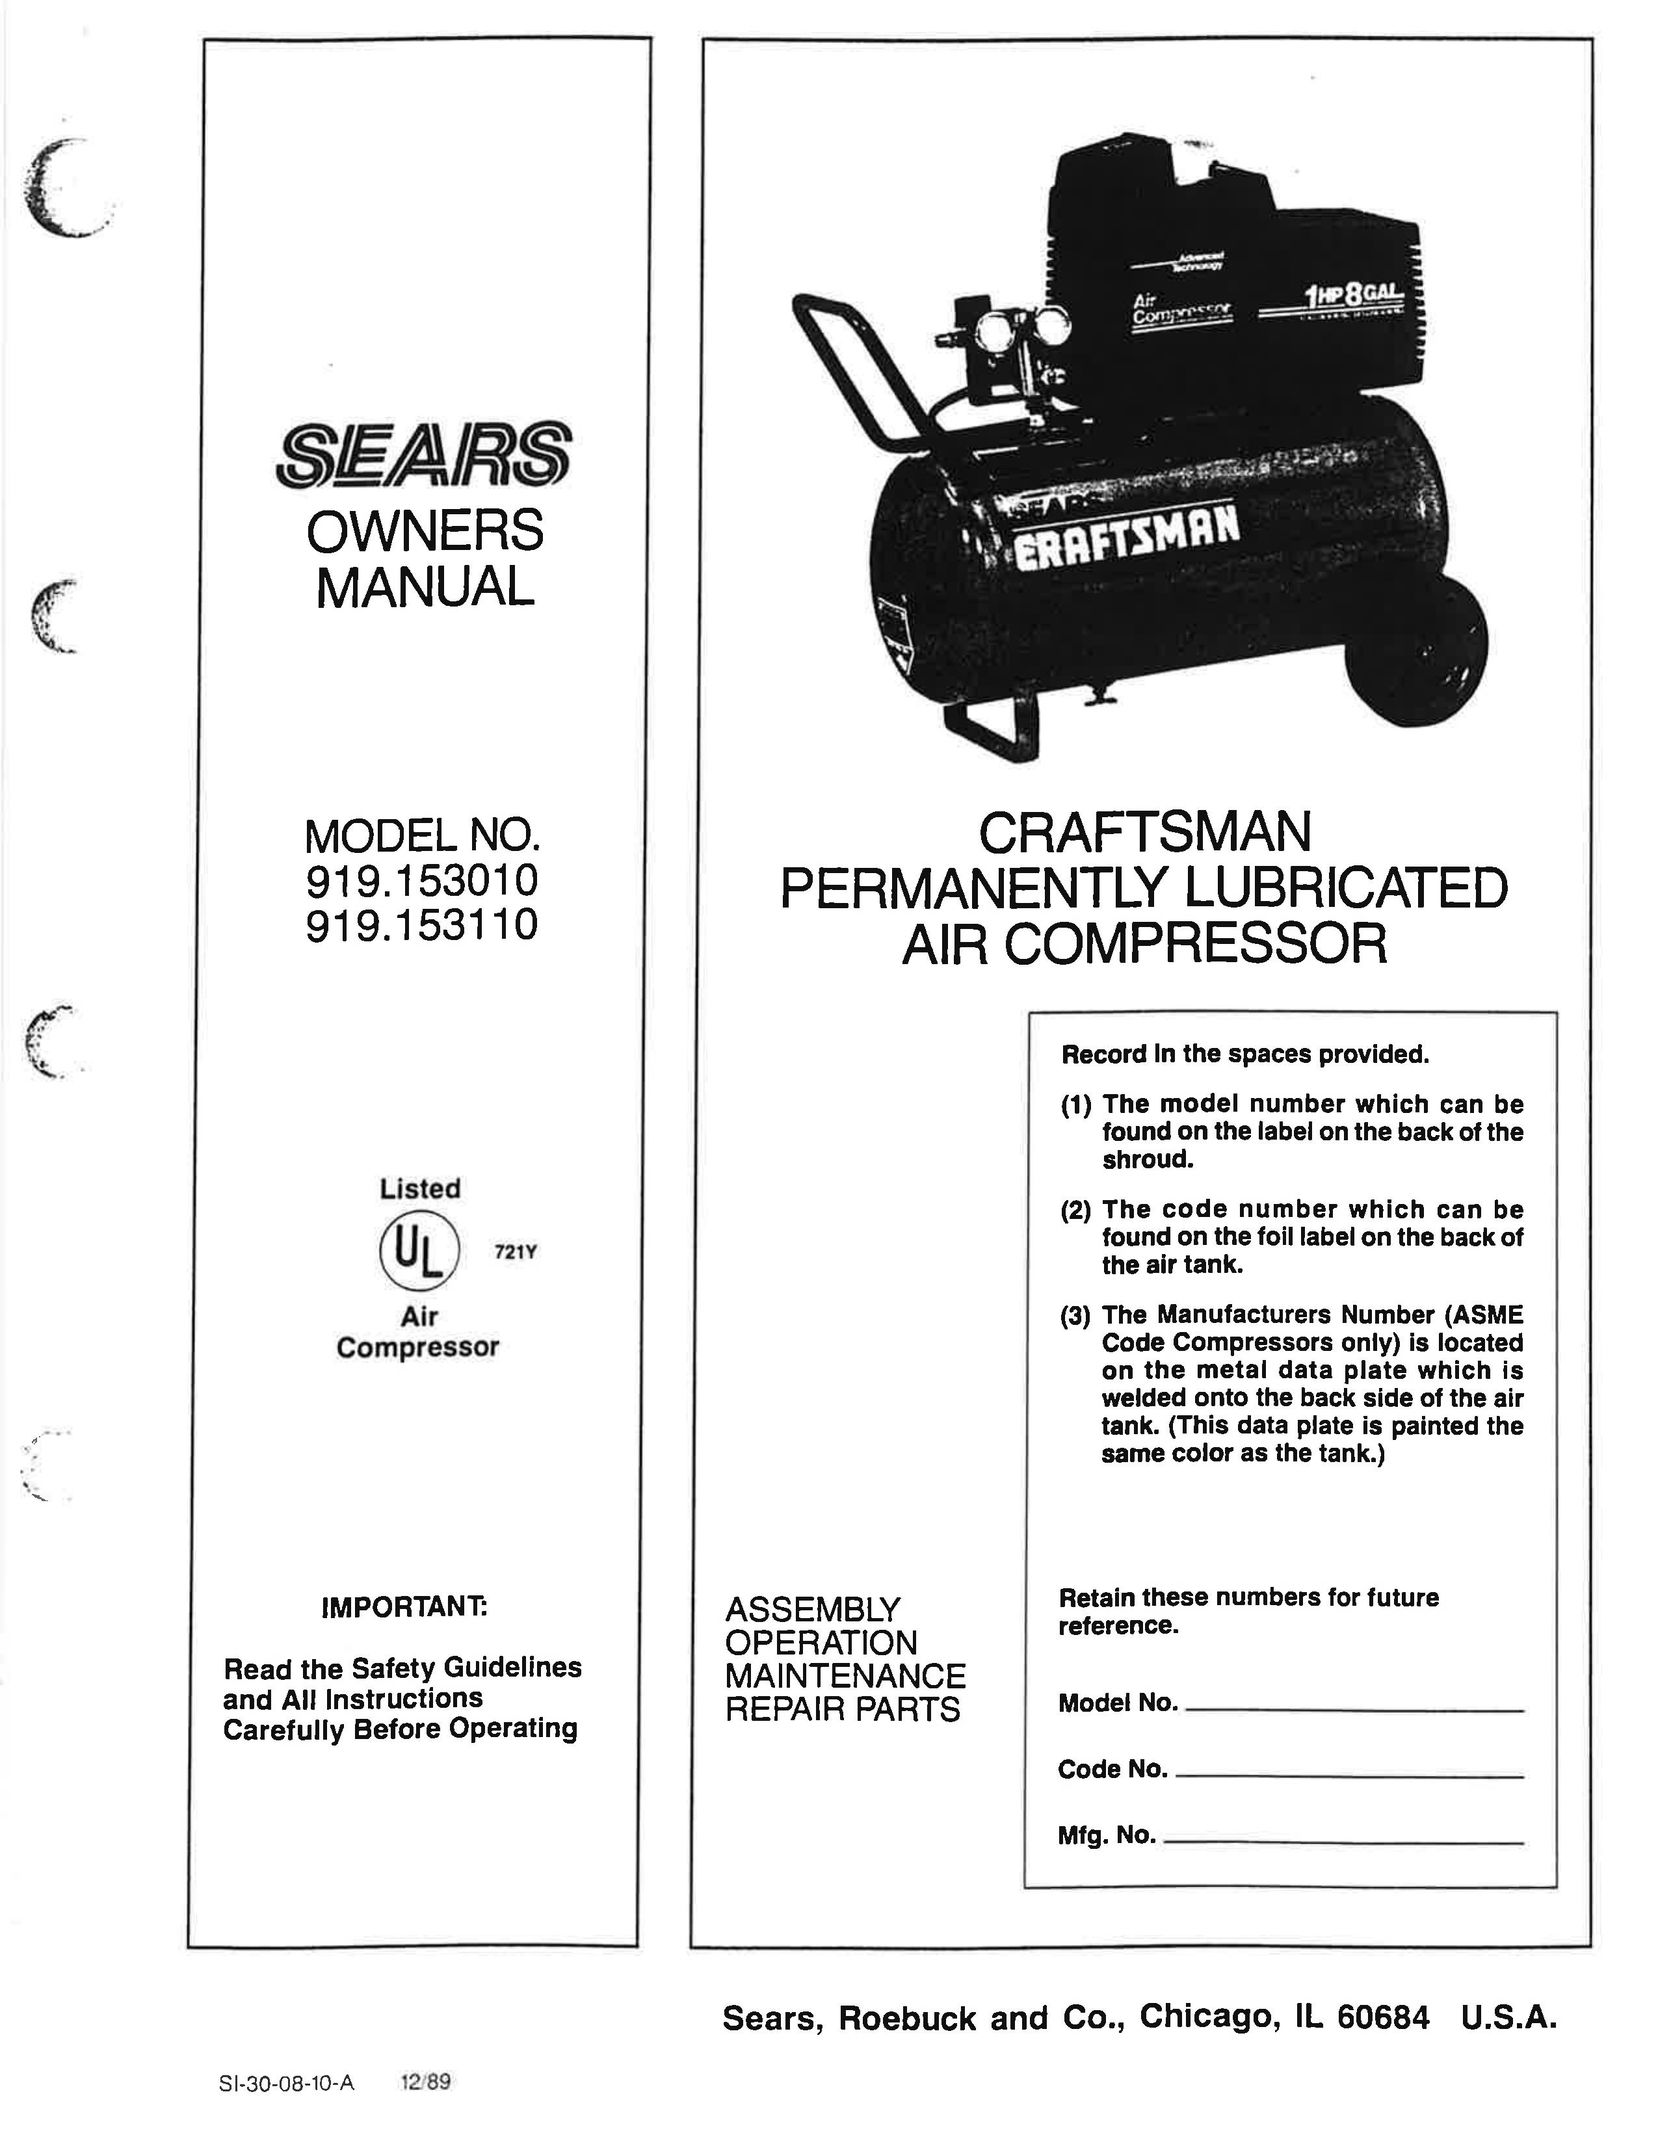 Sears 919.153010 Air Compressor User Manual